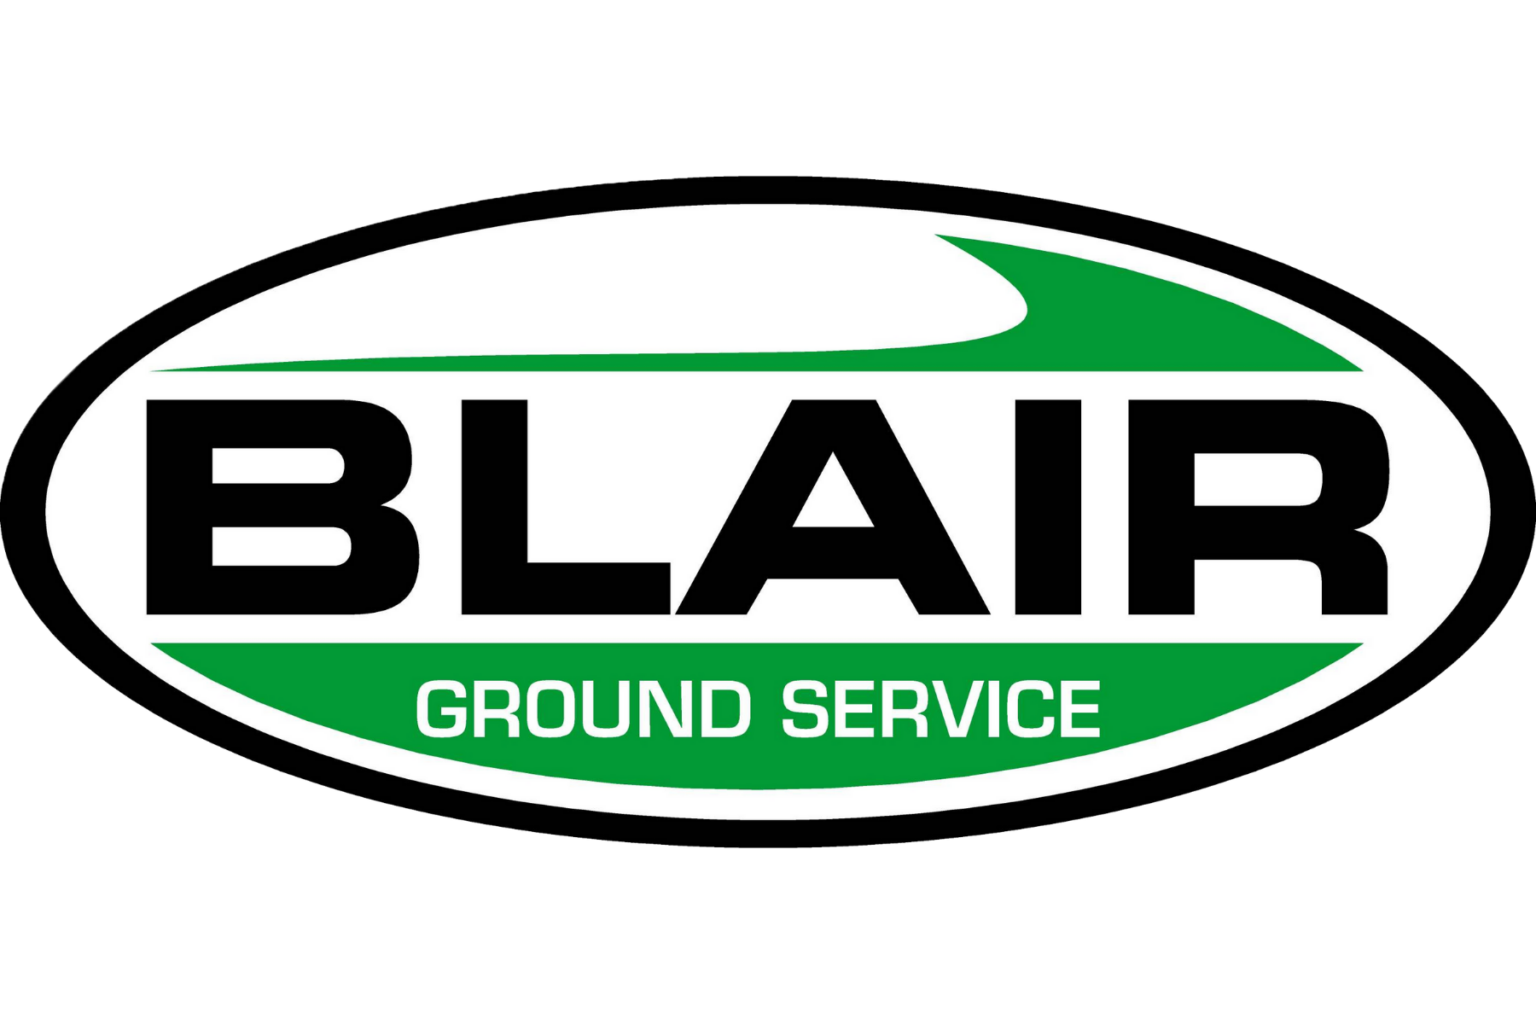 Blair Ground Services logo.